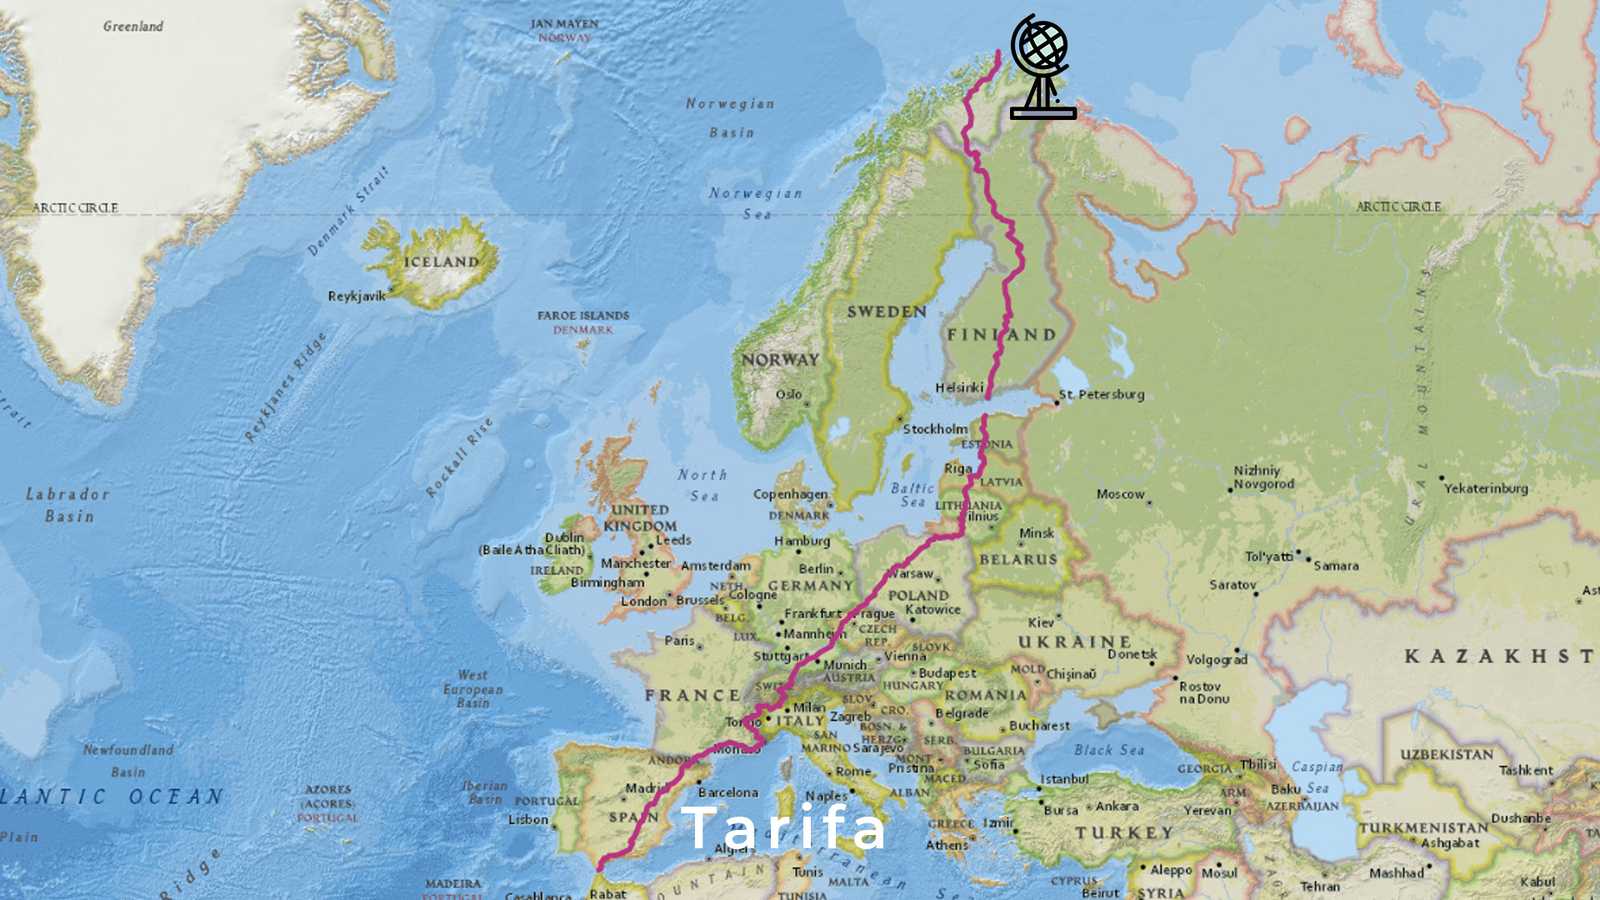 NorthCape-Tarifa race route